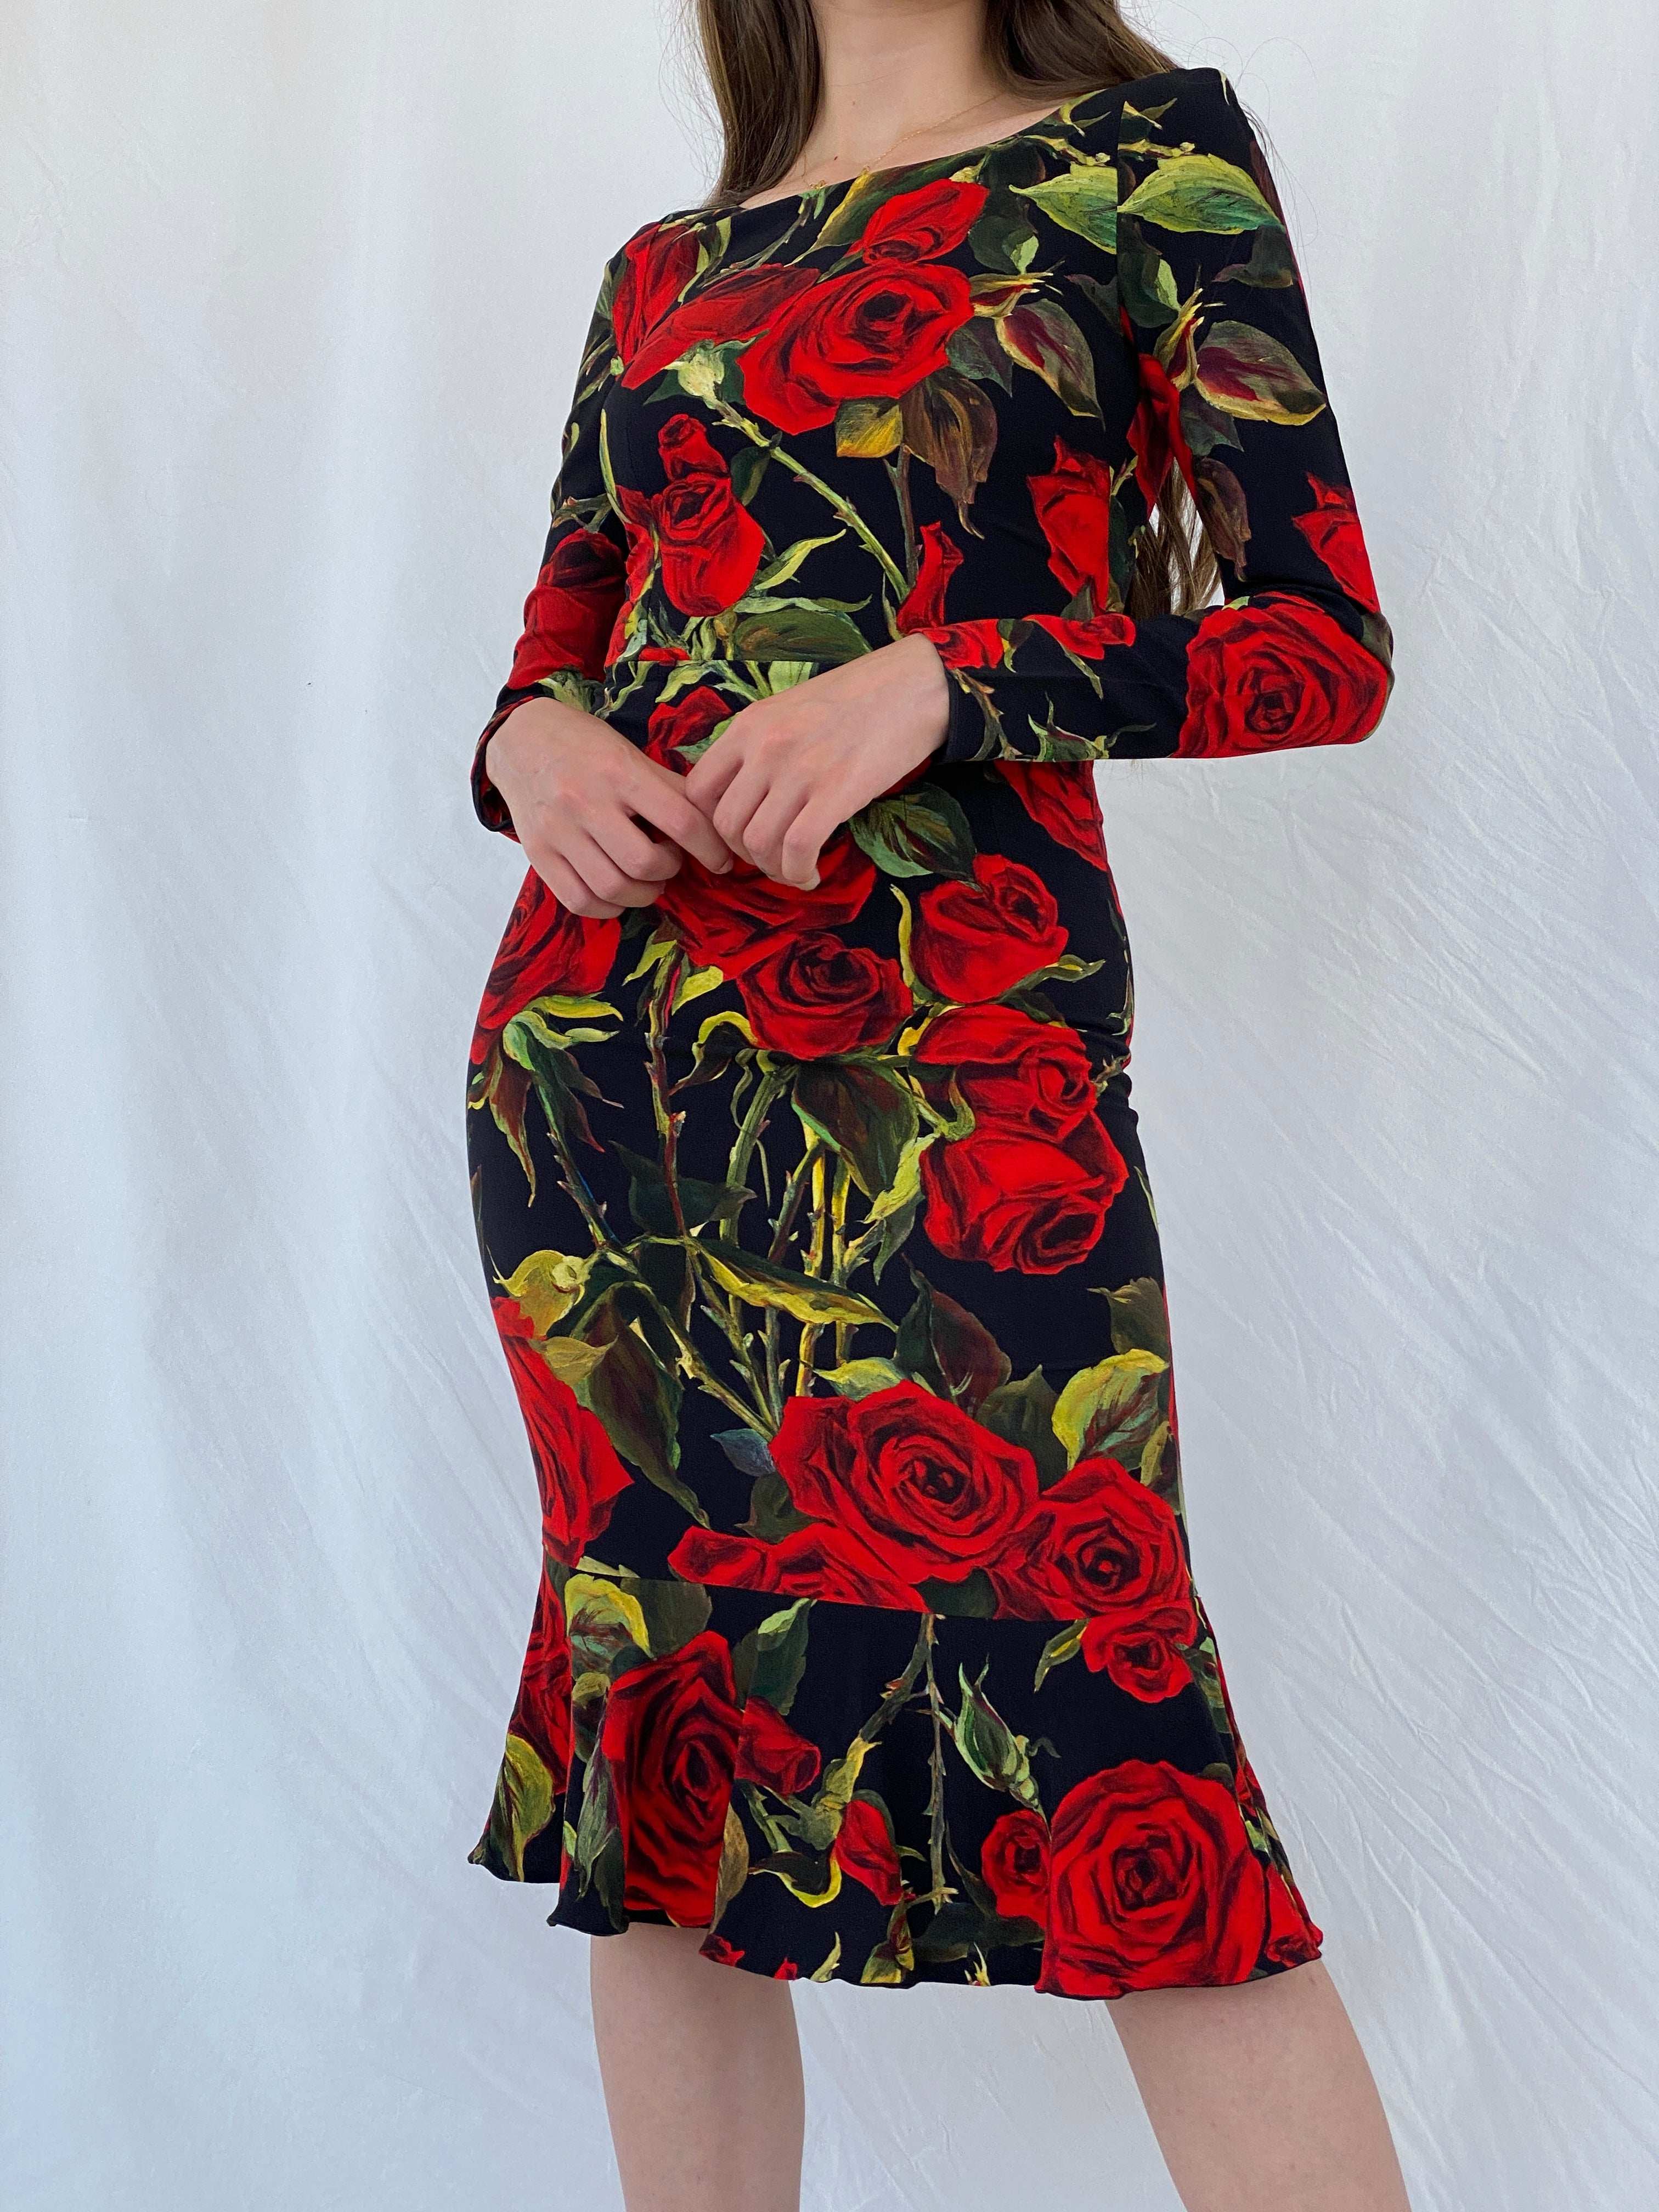 Dolce & Gabbana Red Roses Print Silk Knee-Length Dress - S - Balagan Vintage Midi Dress 00s, 90s, floral dress, midi dress, Mira, NEW IN, Wedding Guest